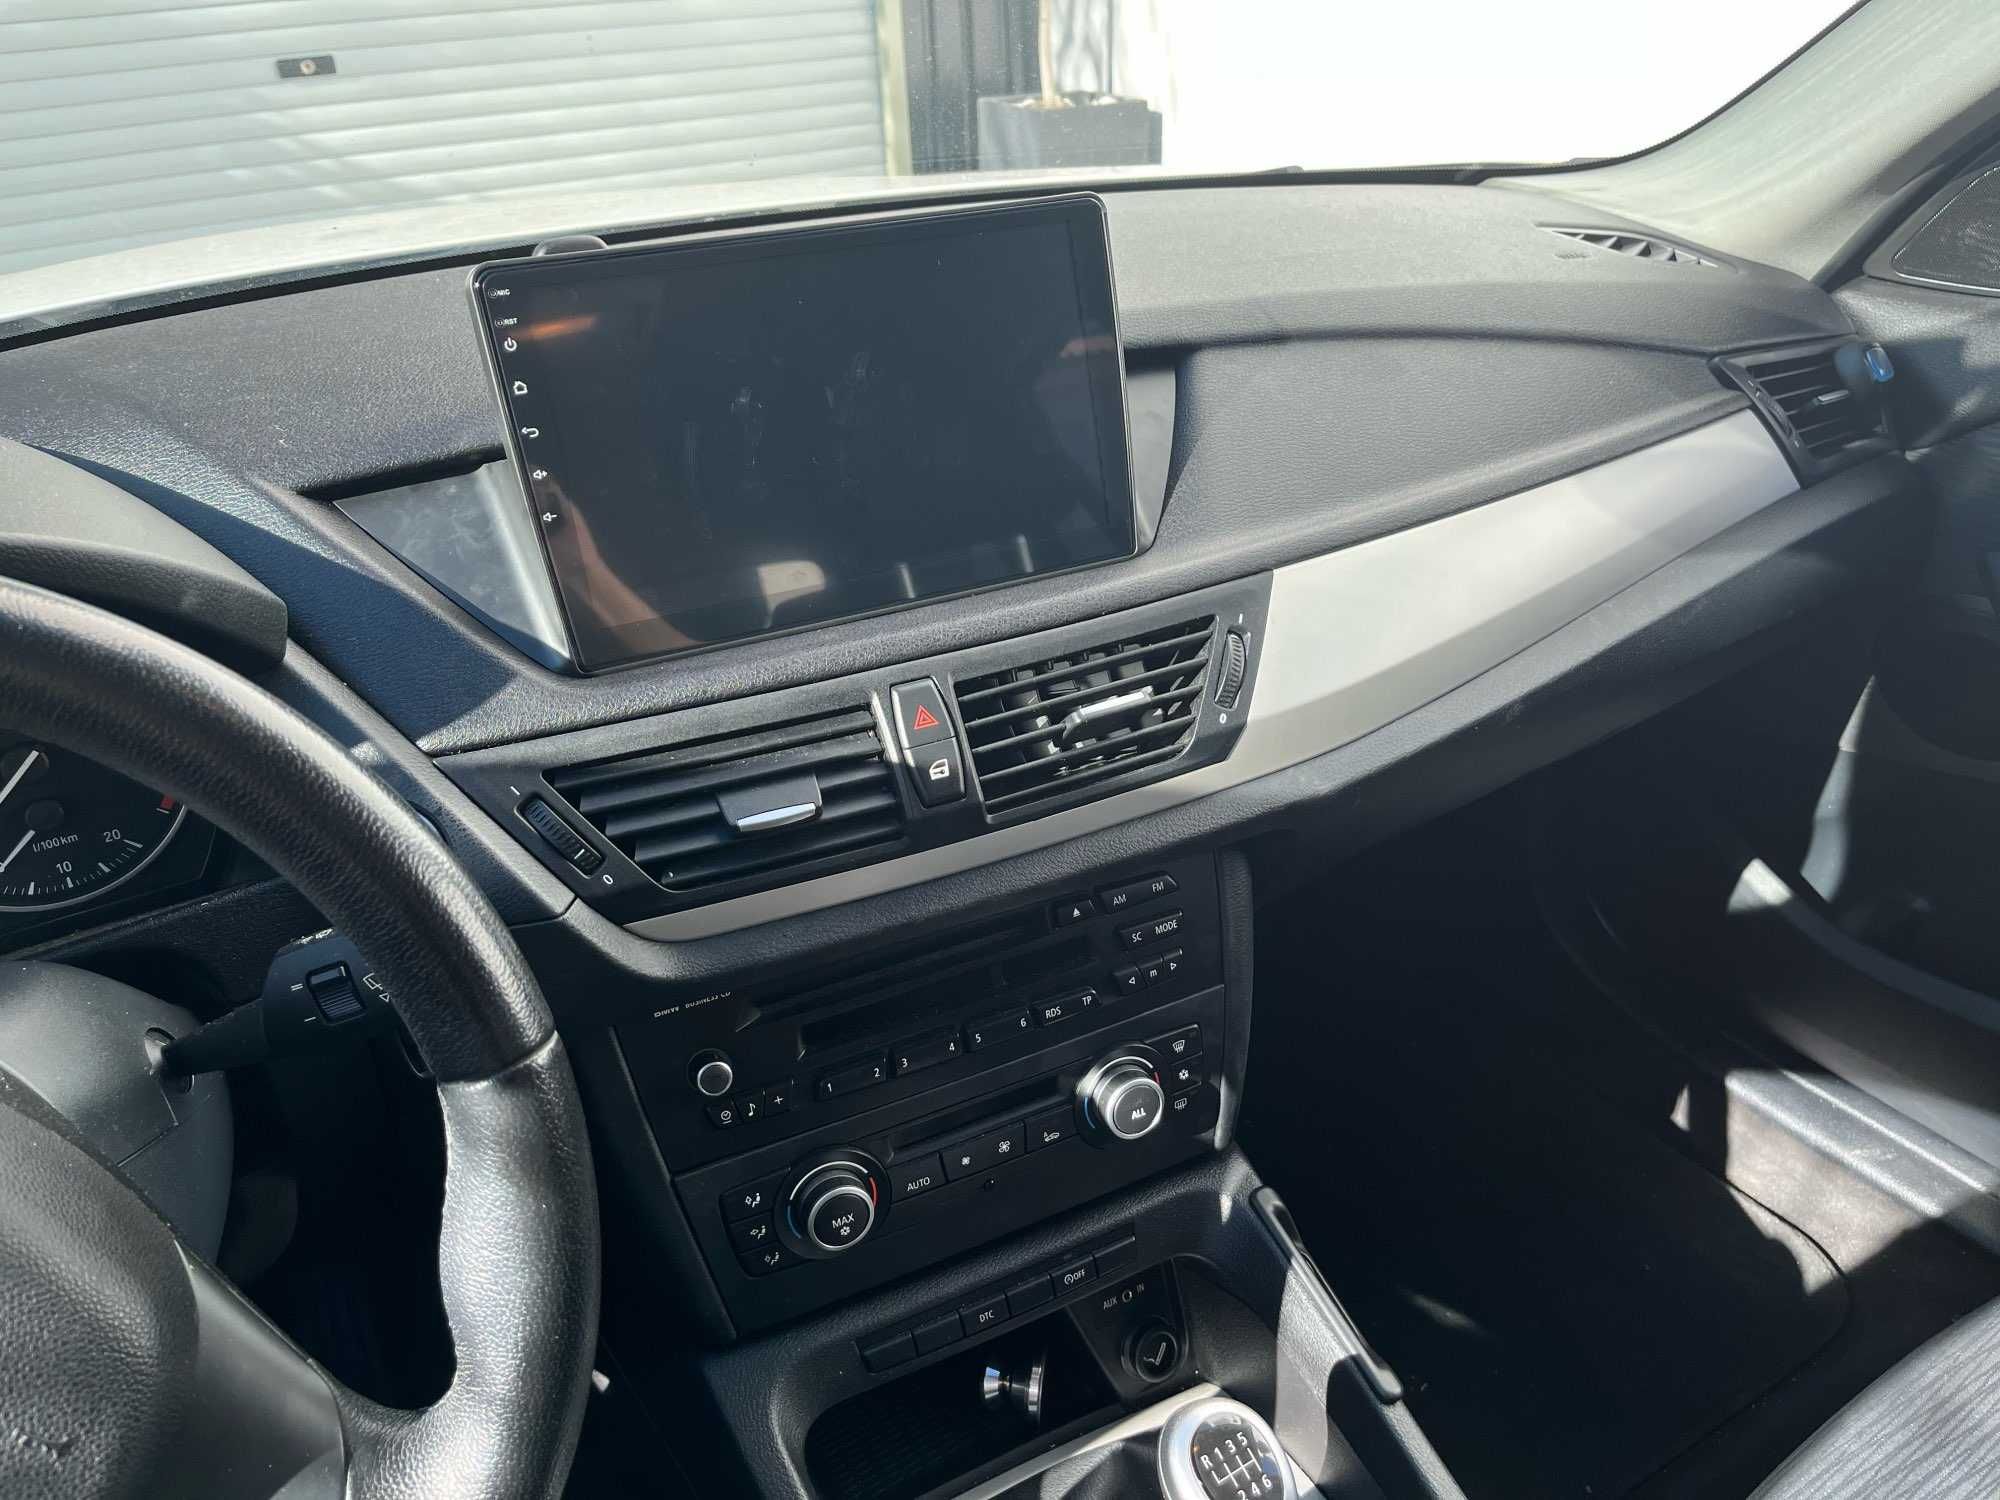 Navigatie 2gbRam Android BMW serial 3 E46 gps canbus c